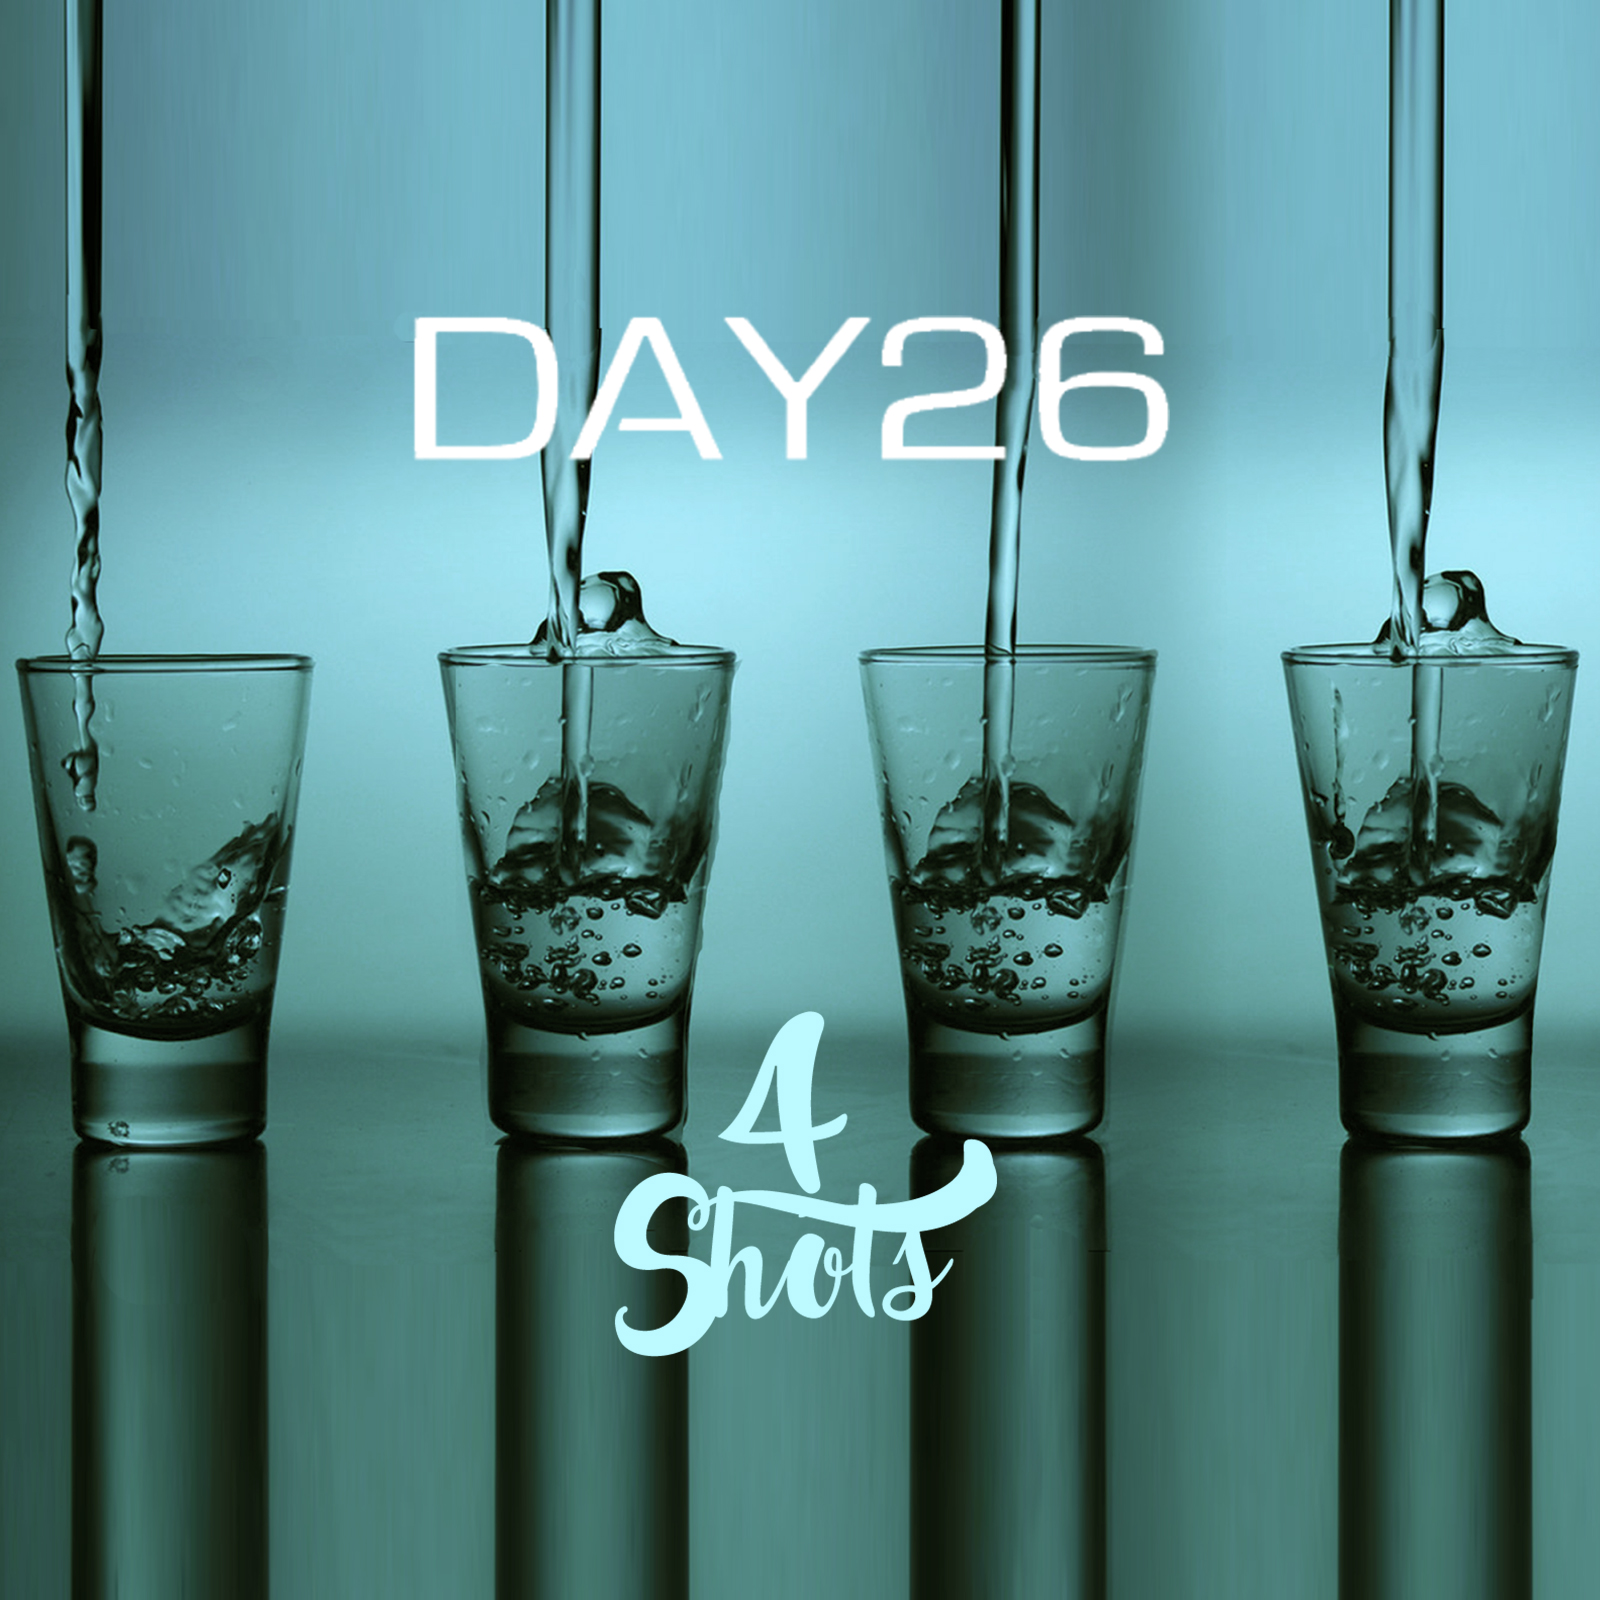 New Music: Day26 – 4 Shots